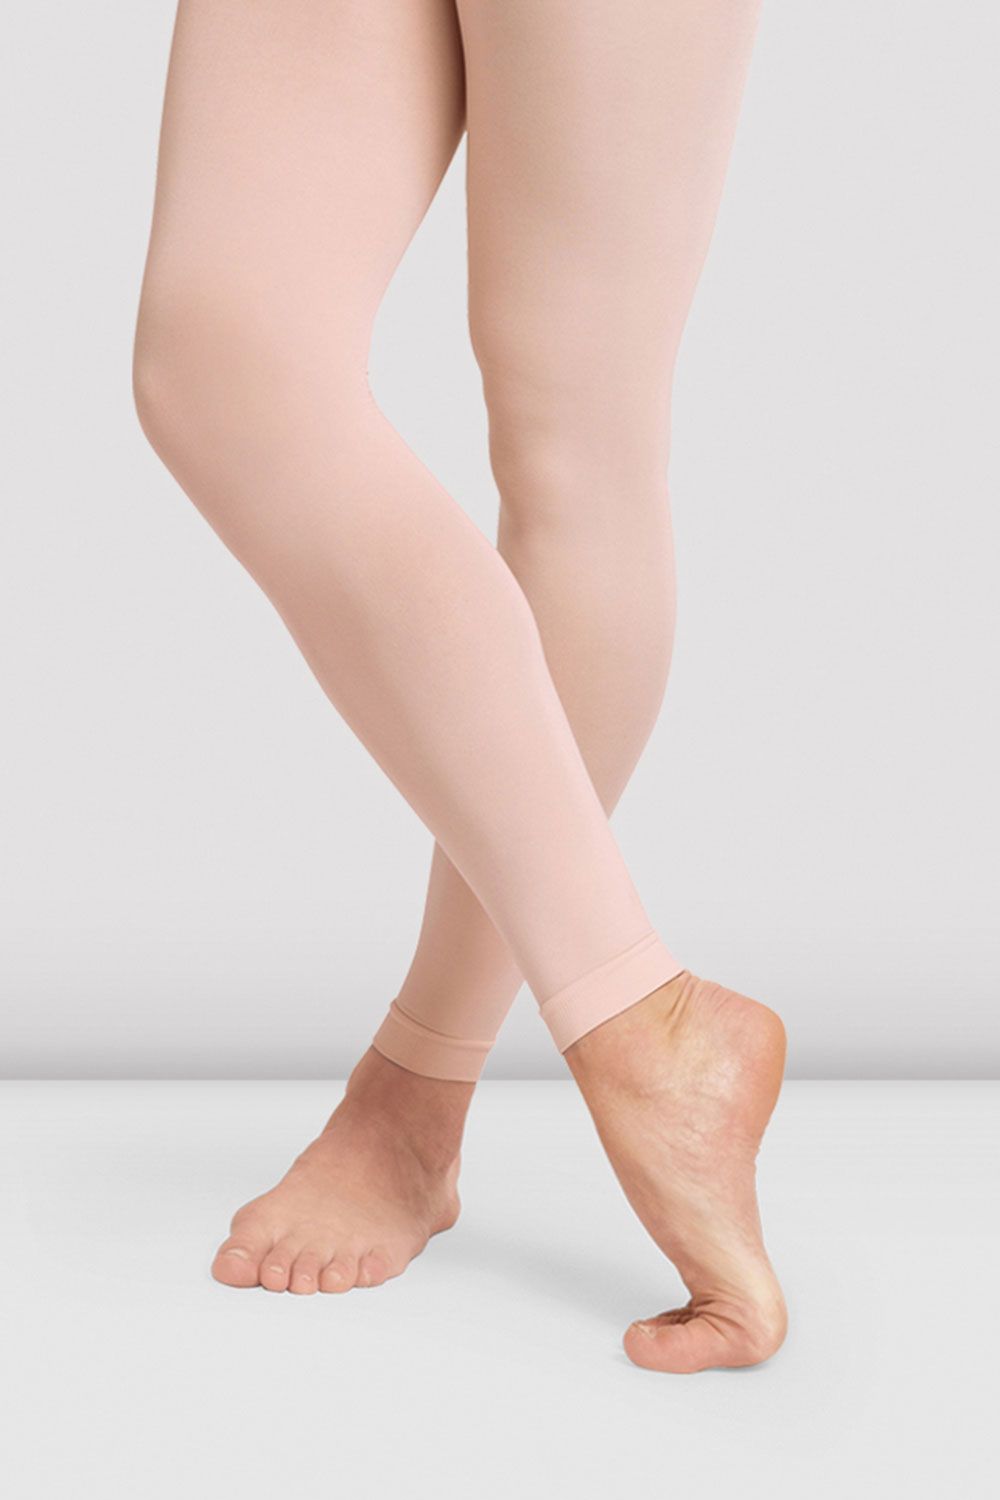 Pink Cotton Lycra Churidar Leggings, ESTFABCHL-1807